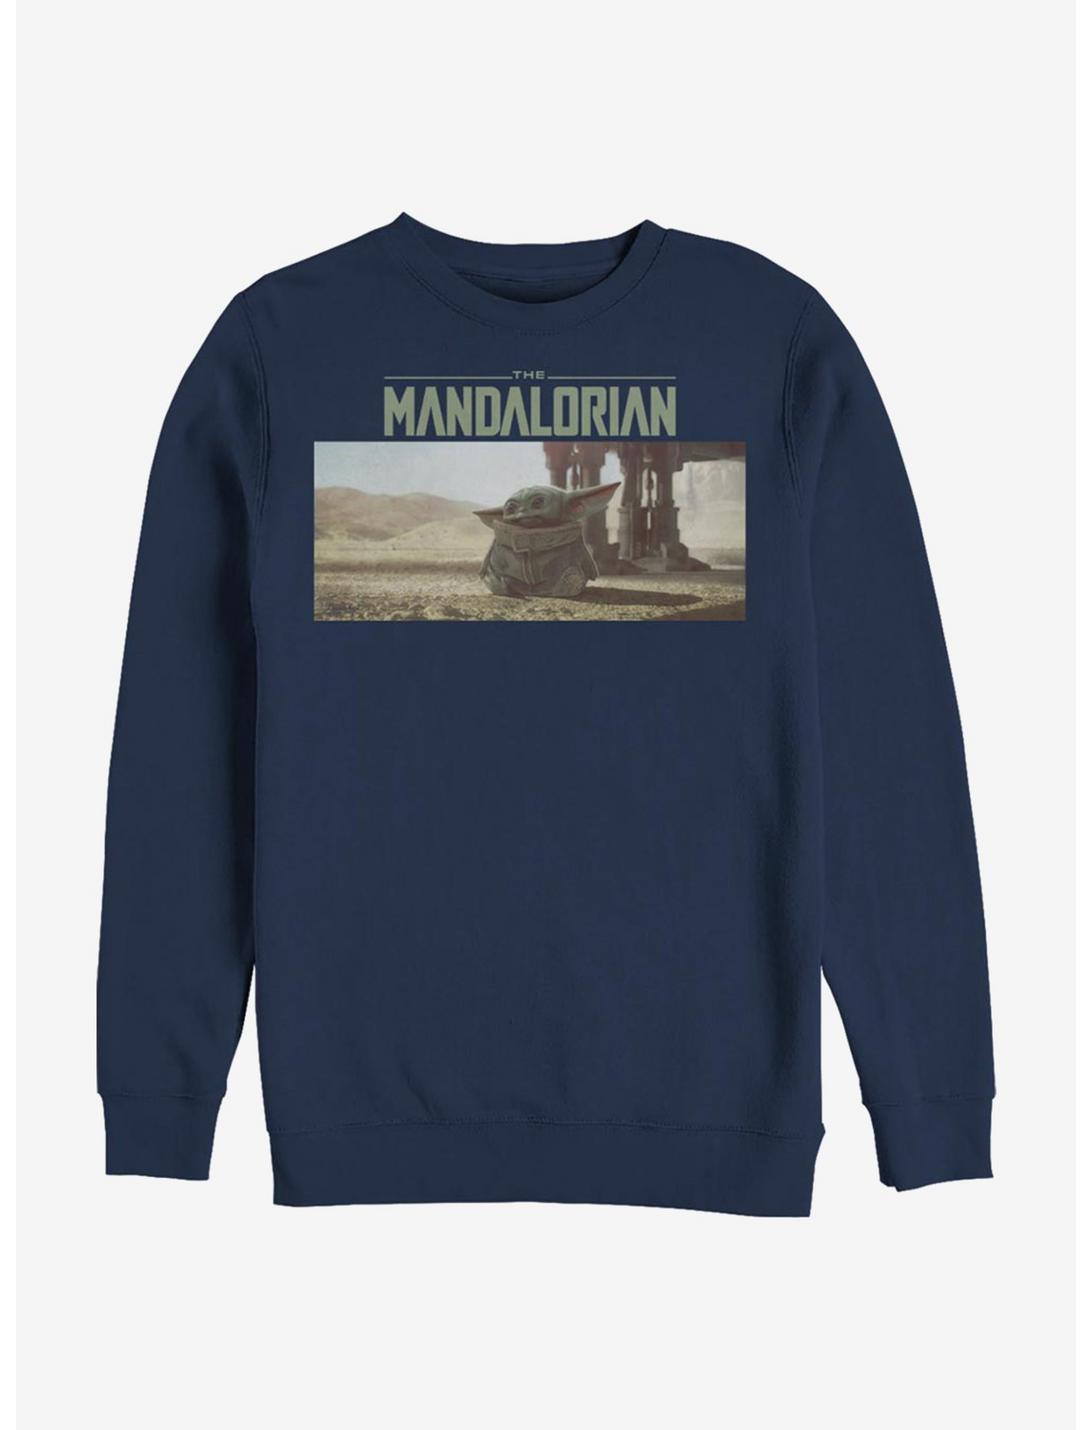 Star Wars The Mandalorian Still Looking Sweatshirt, NAVY, hi-res